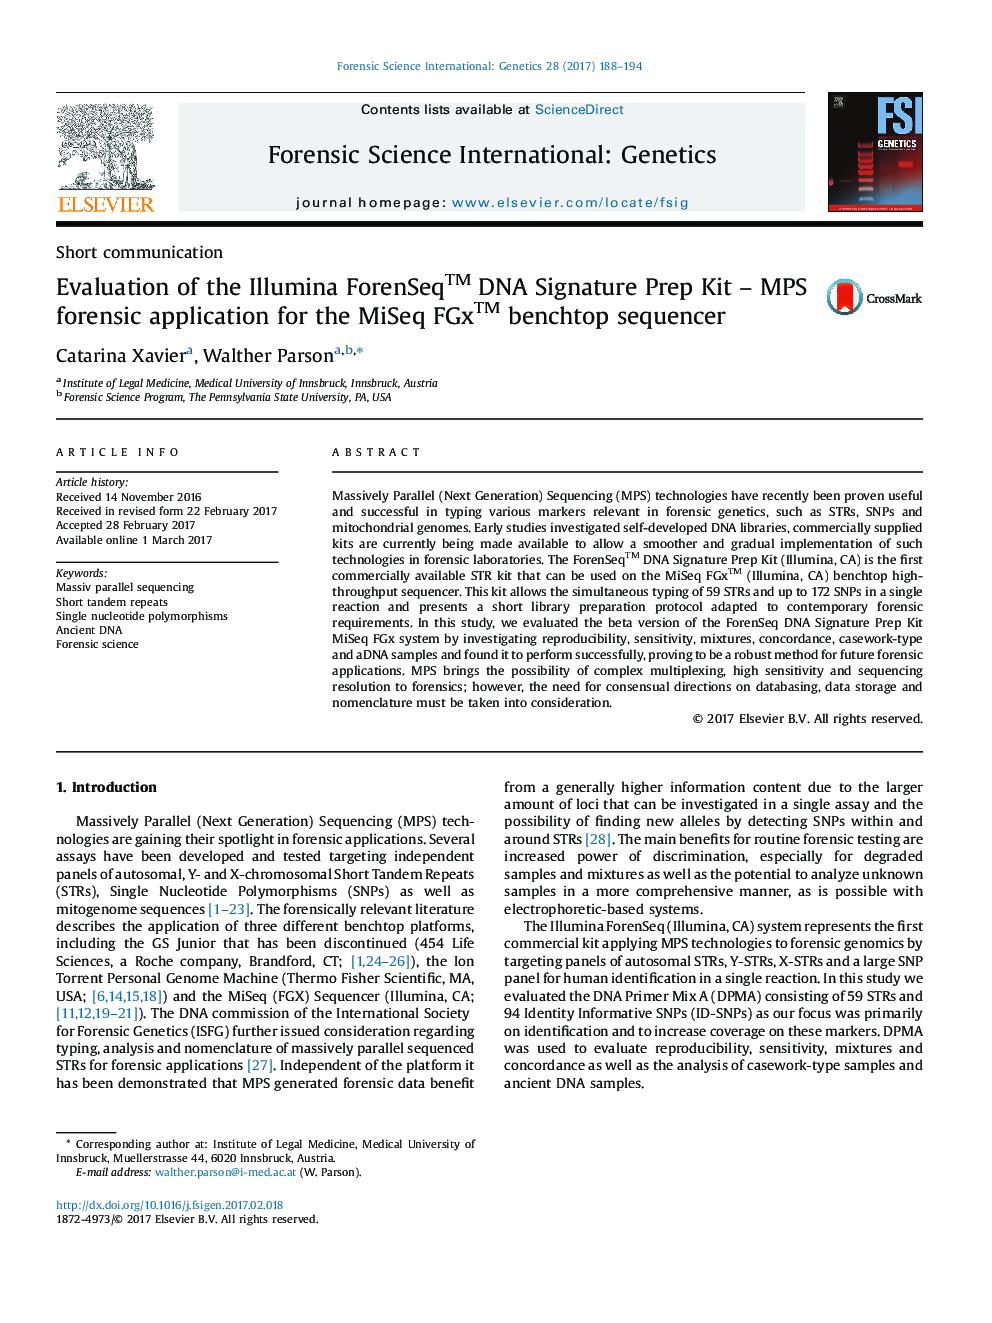 Evaluation of the Illumina ForenSeqâ¢ DNA Signature Prep Kit - MPS forensic application for the MiSeq FGxâ¢ benchtop sequencer